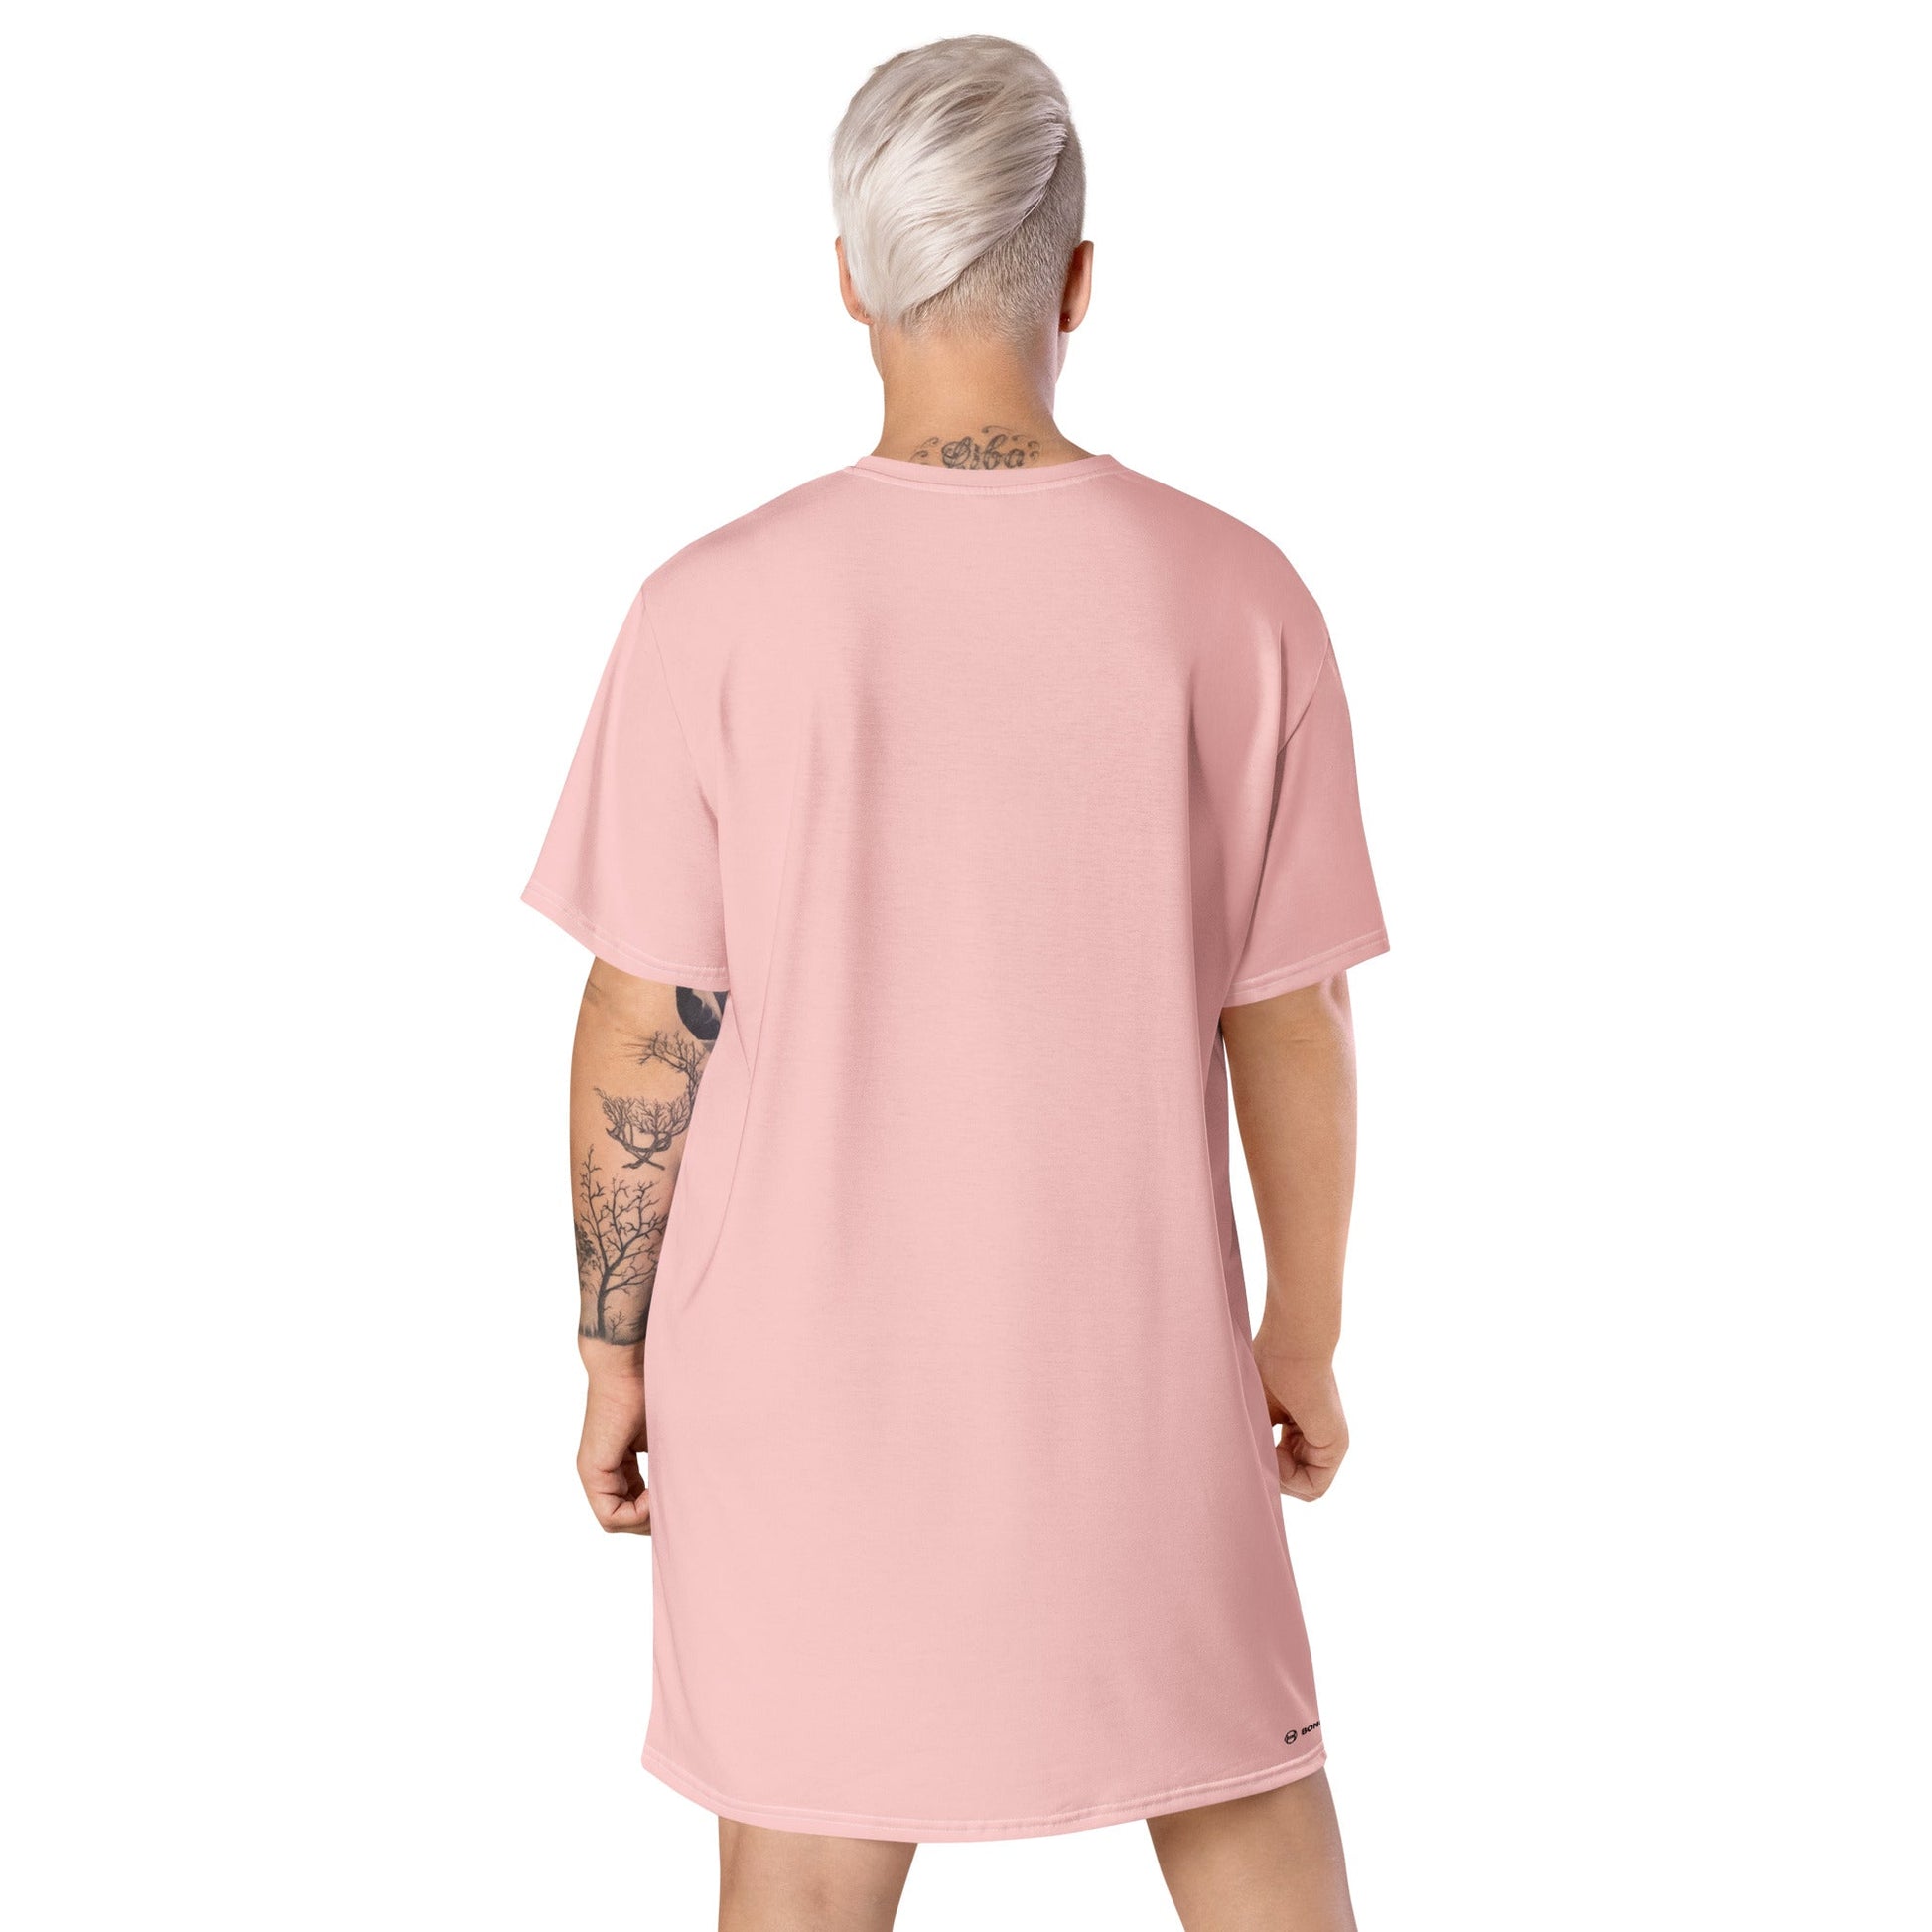 ARAB WOMAN T-Shirt Dress - Bonotee